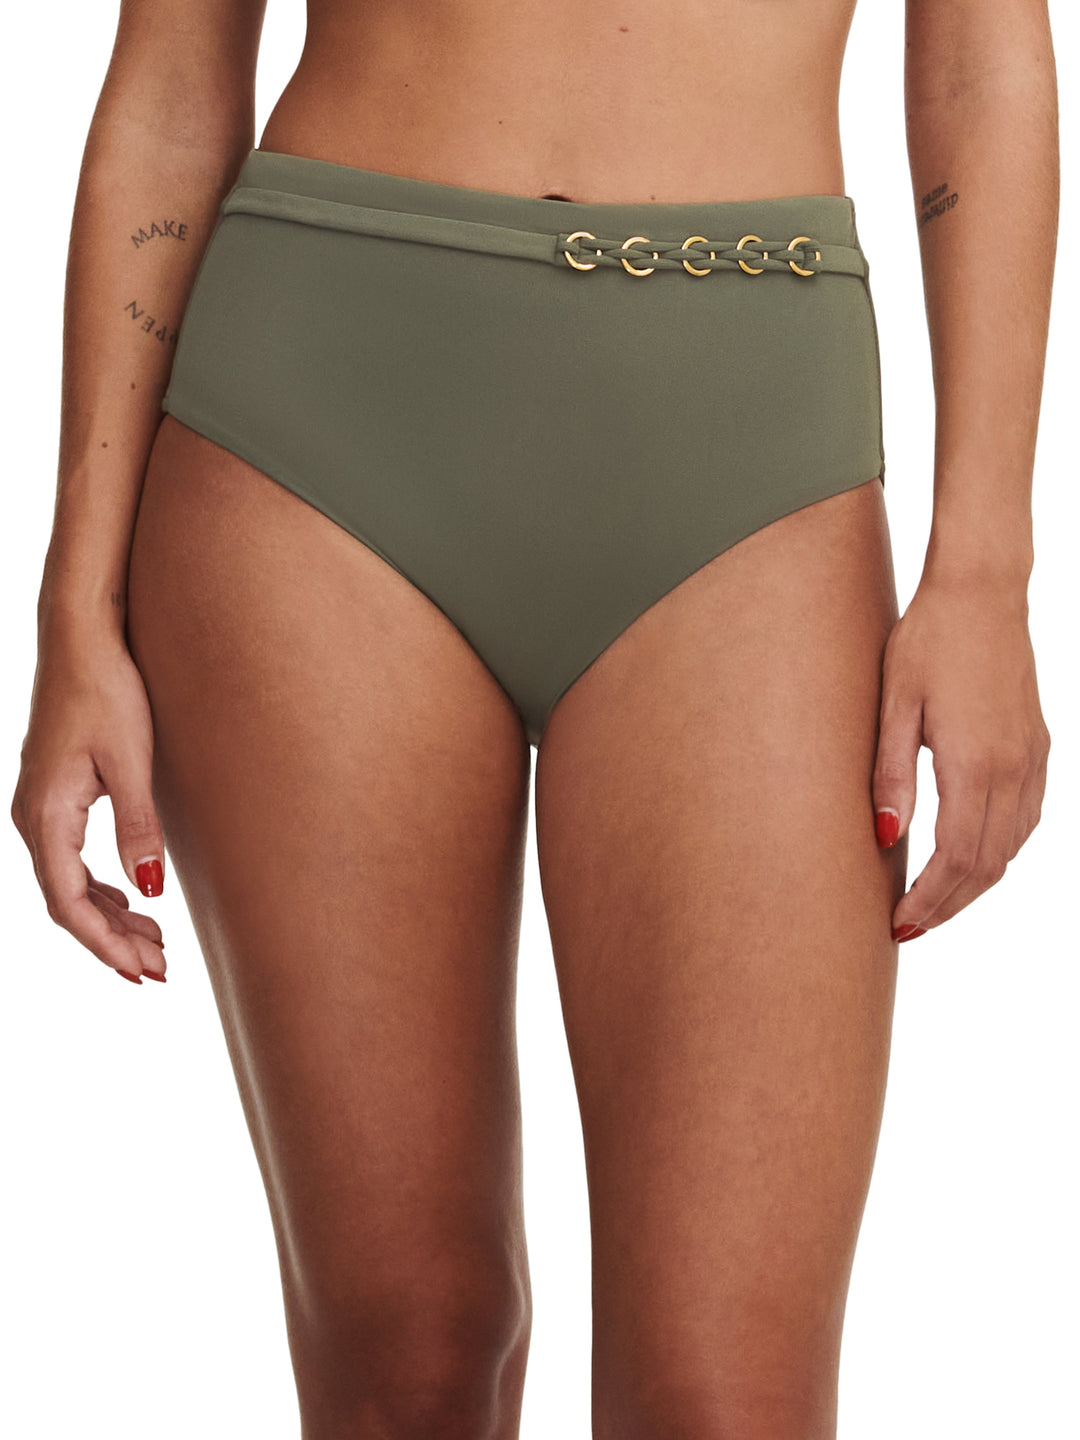 Chantelle Swimwear Emblem 全比基尼三角褲 - 卡其綠色全比基尼三角褲 Chantelle